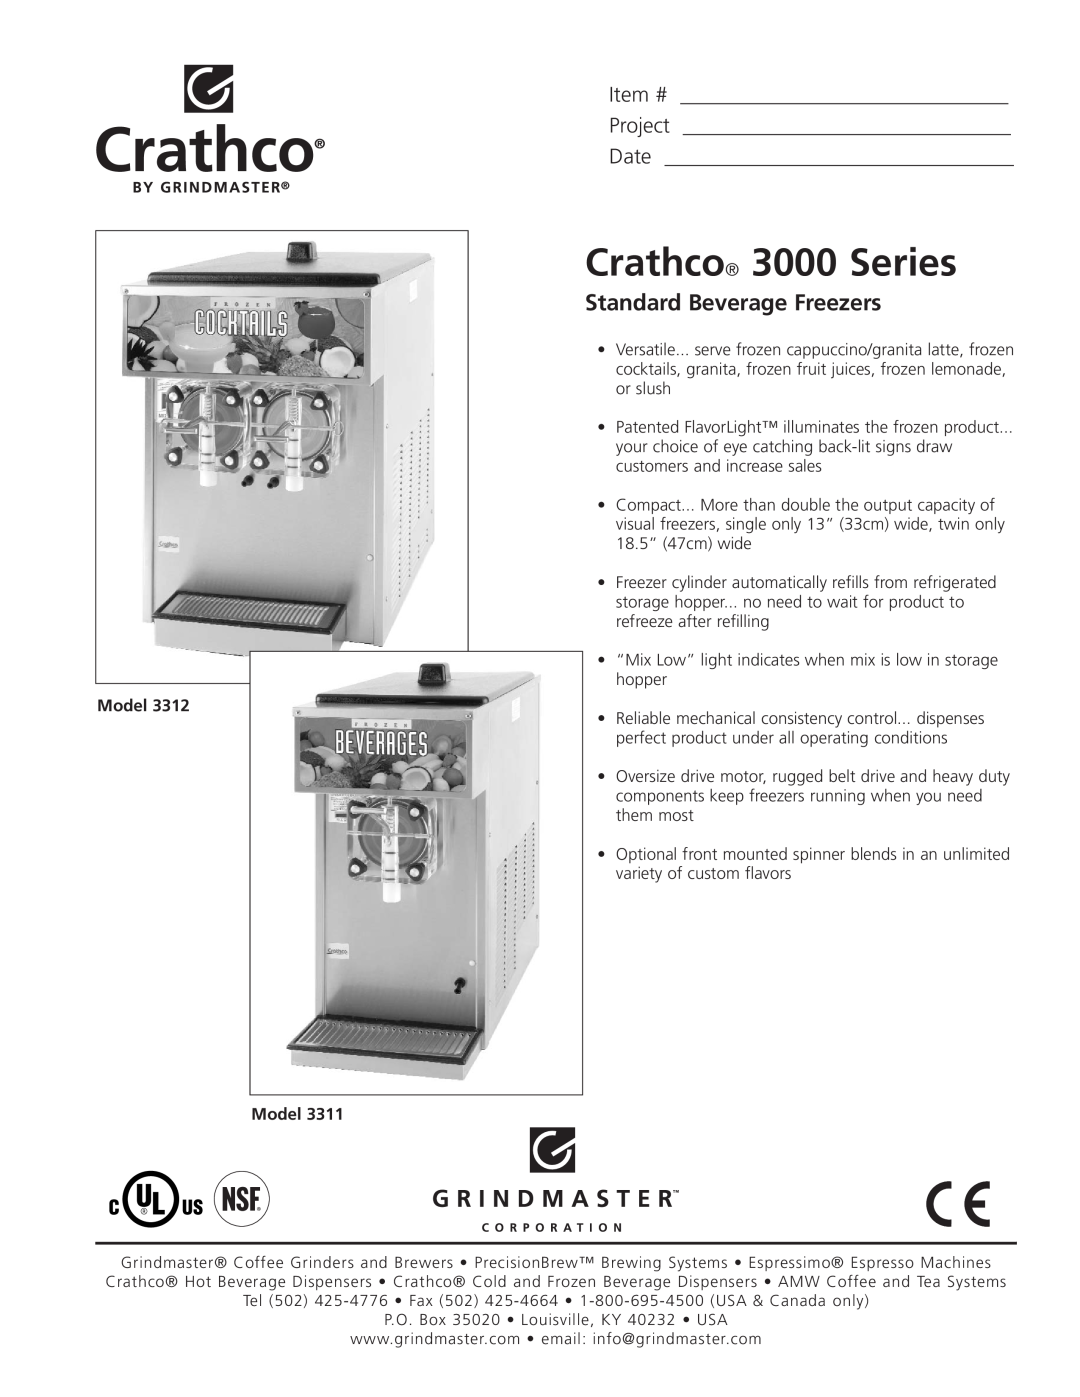 Grindmaster 3312 manual Crathco 3000 Series, Standard Beverage Freezers, Item #, Project, Date, Model Model 